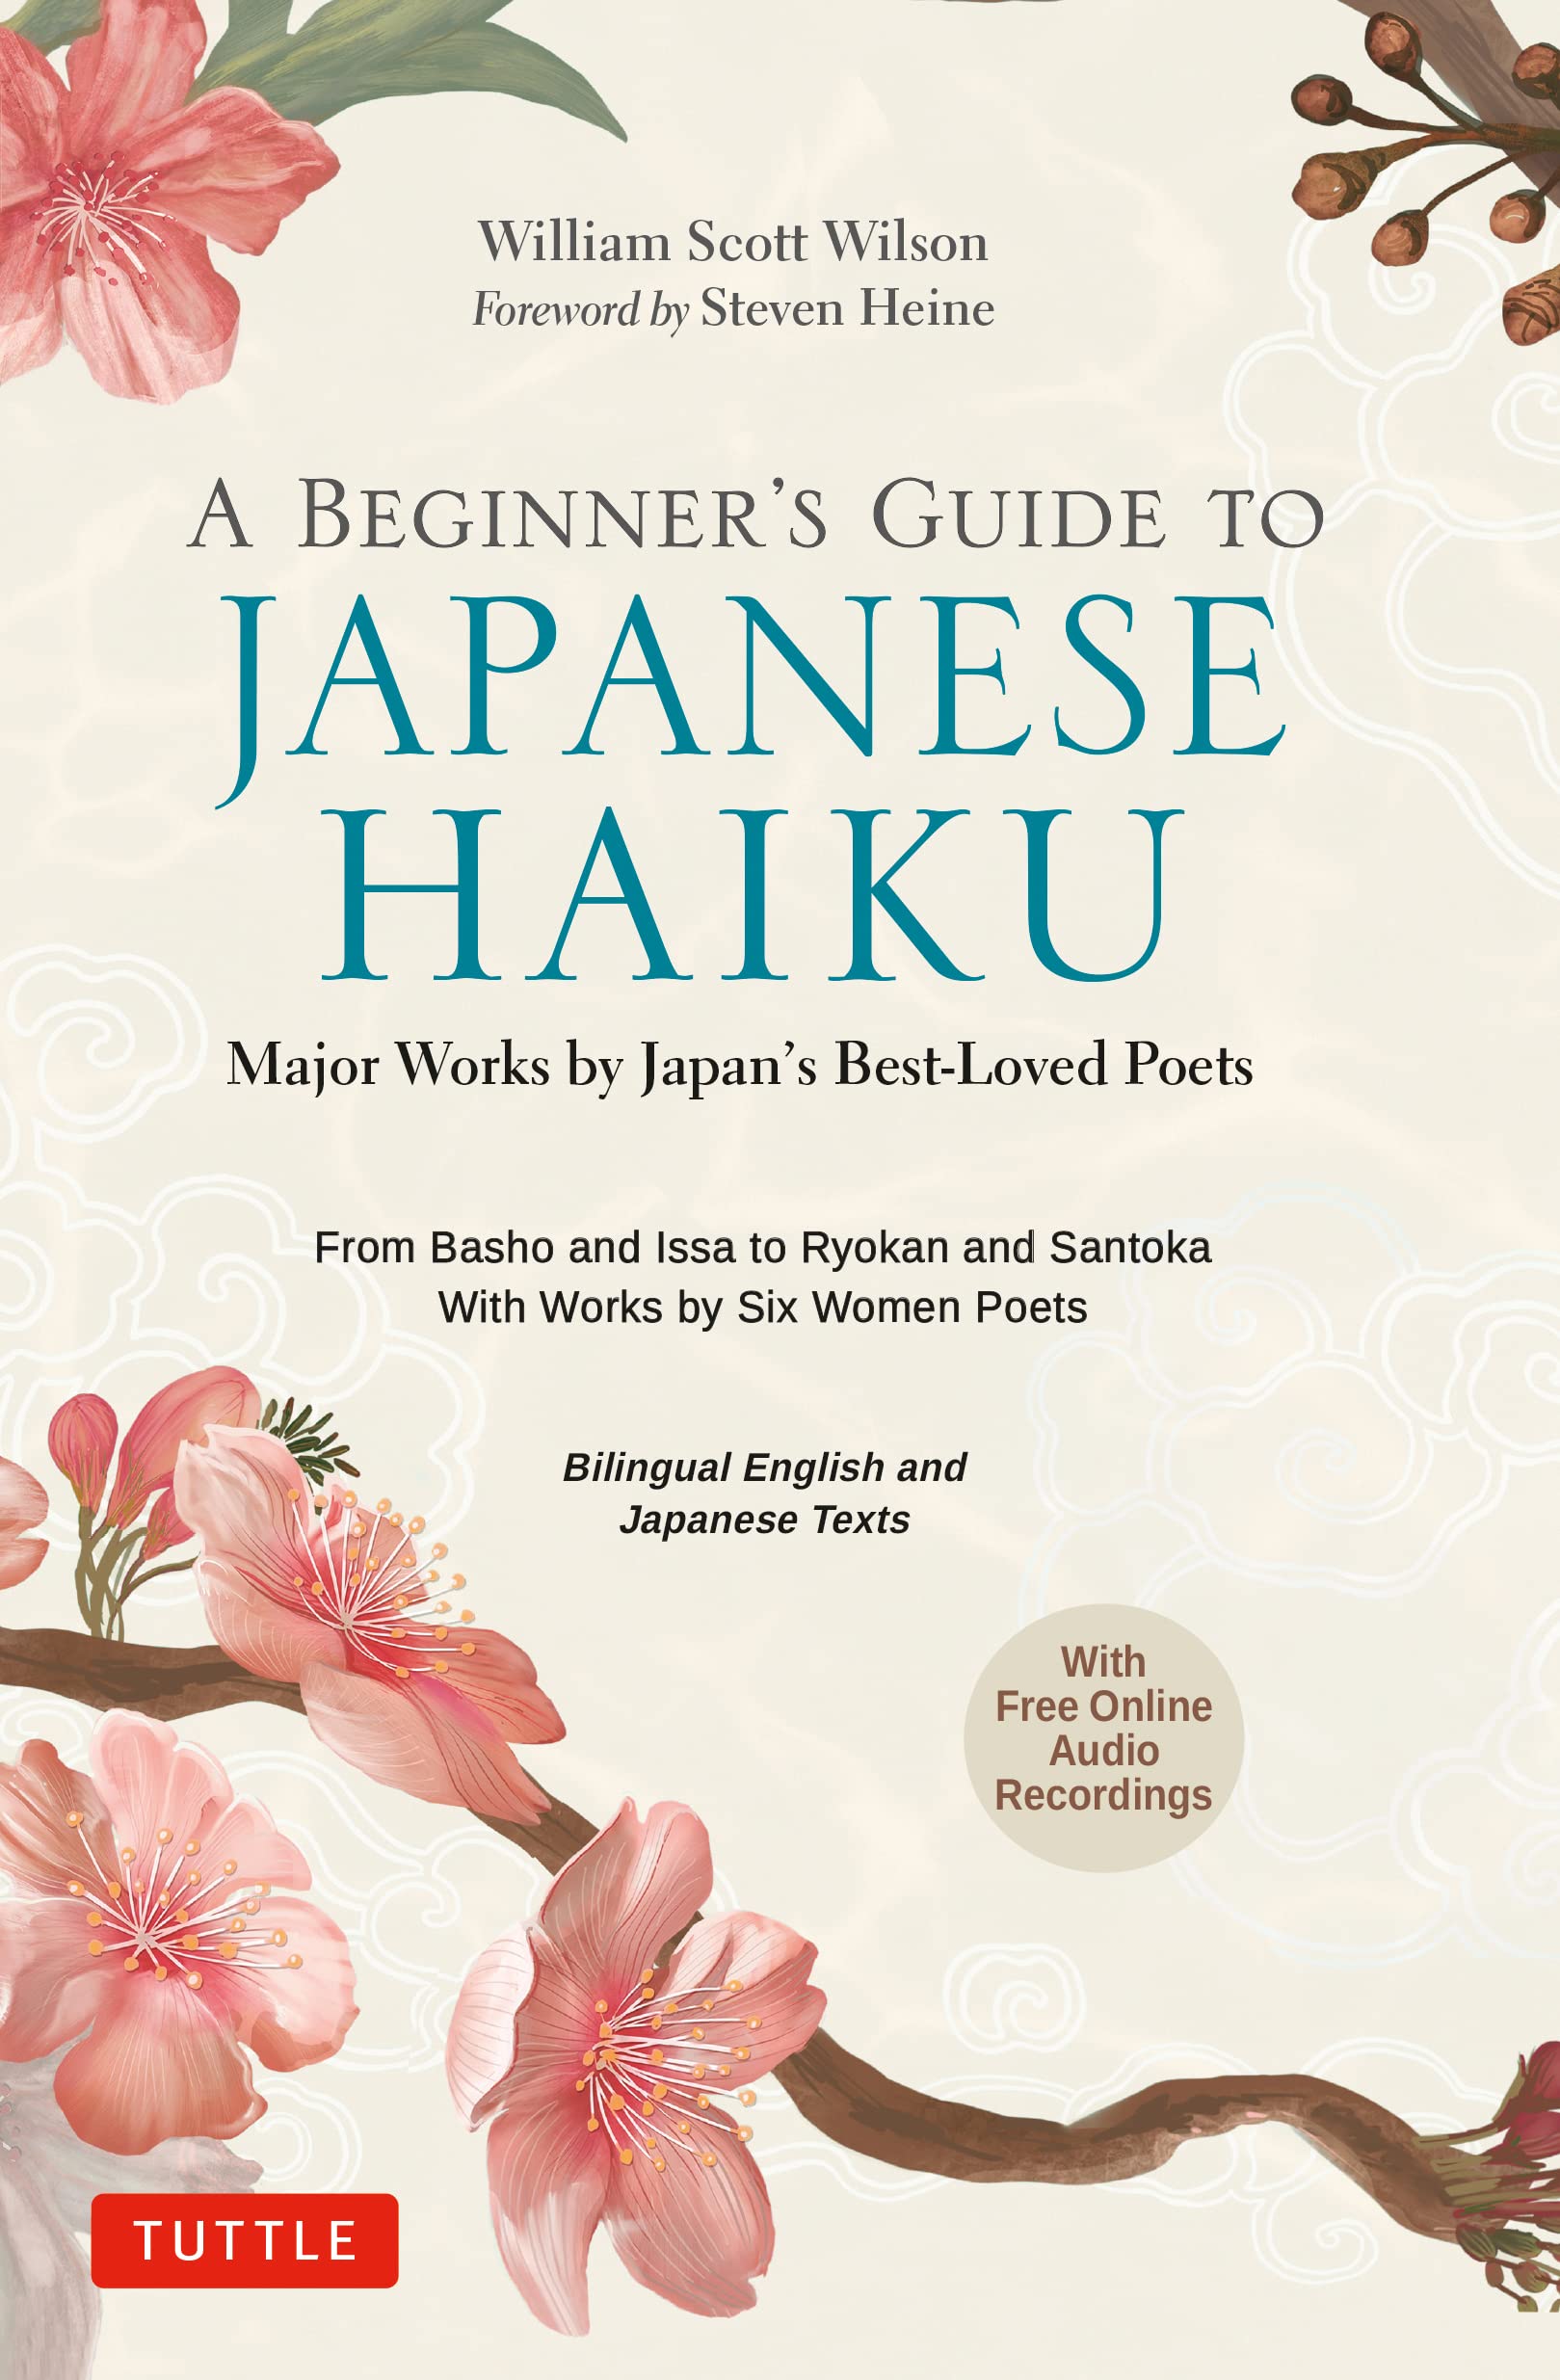 A-Beginners-Guide-to-Japanese-Haiku-by-William-Scott-Wilson-PDF-EPUB